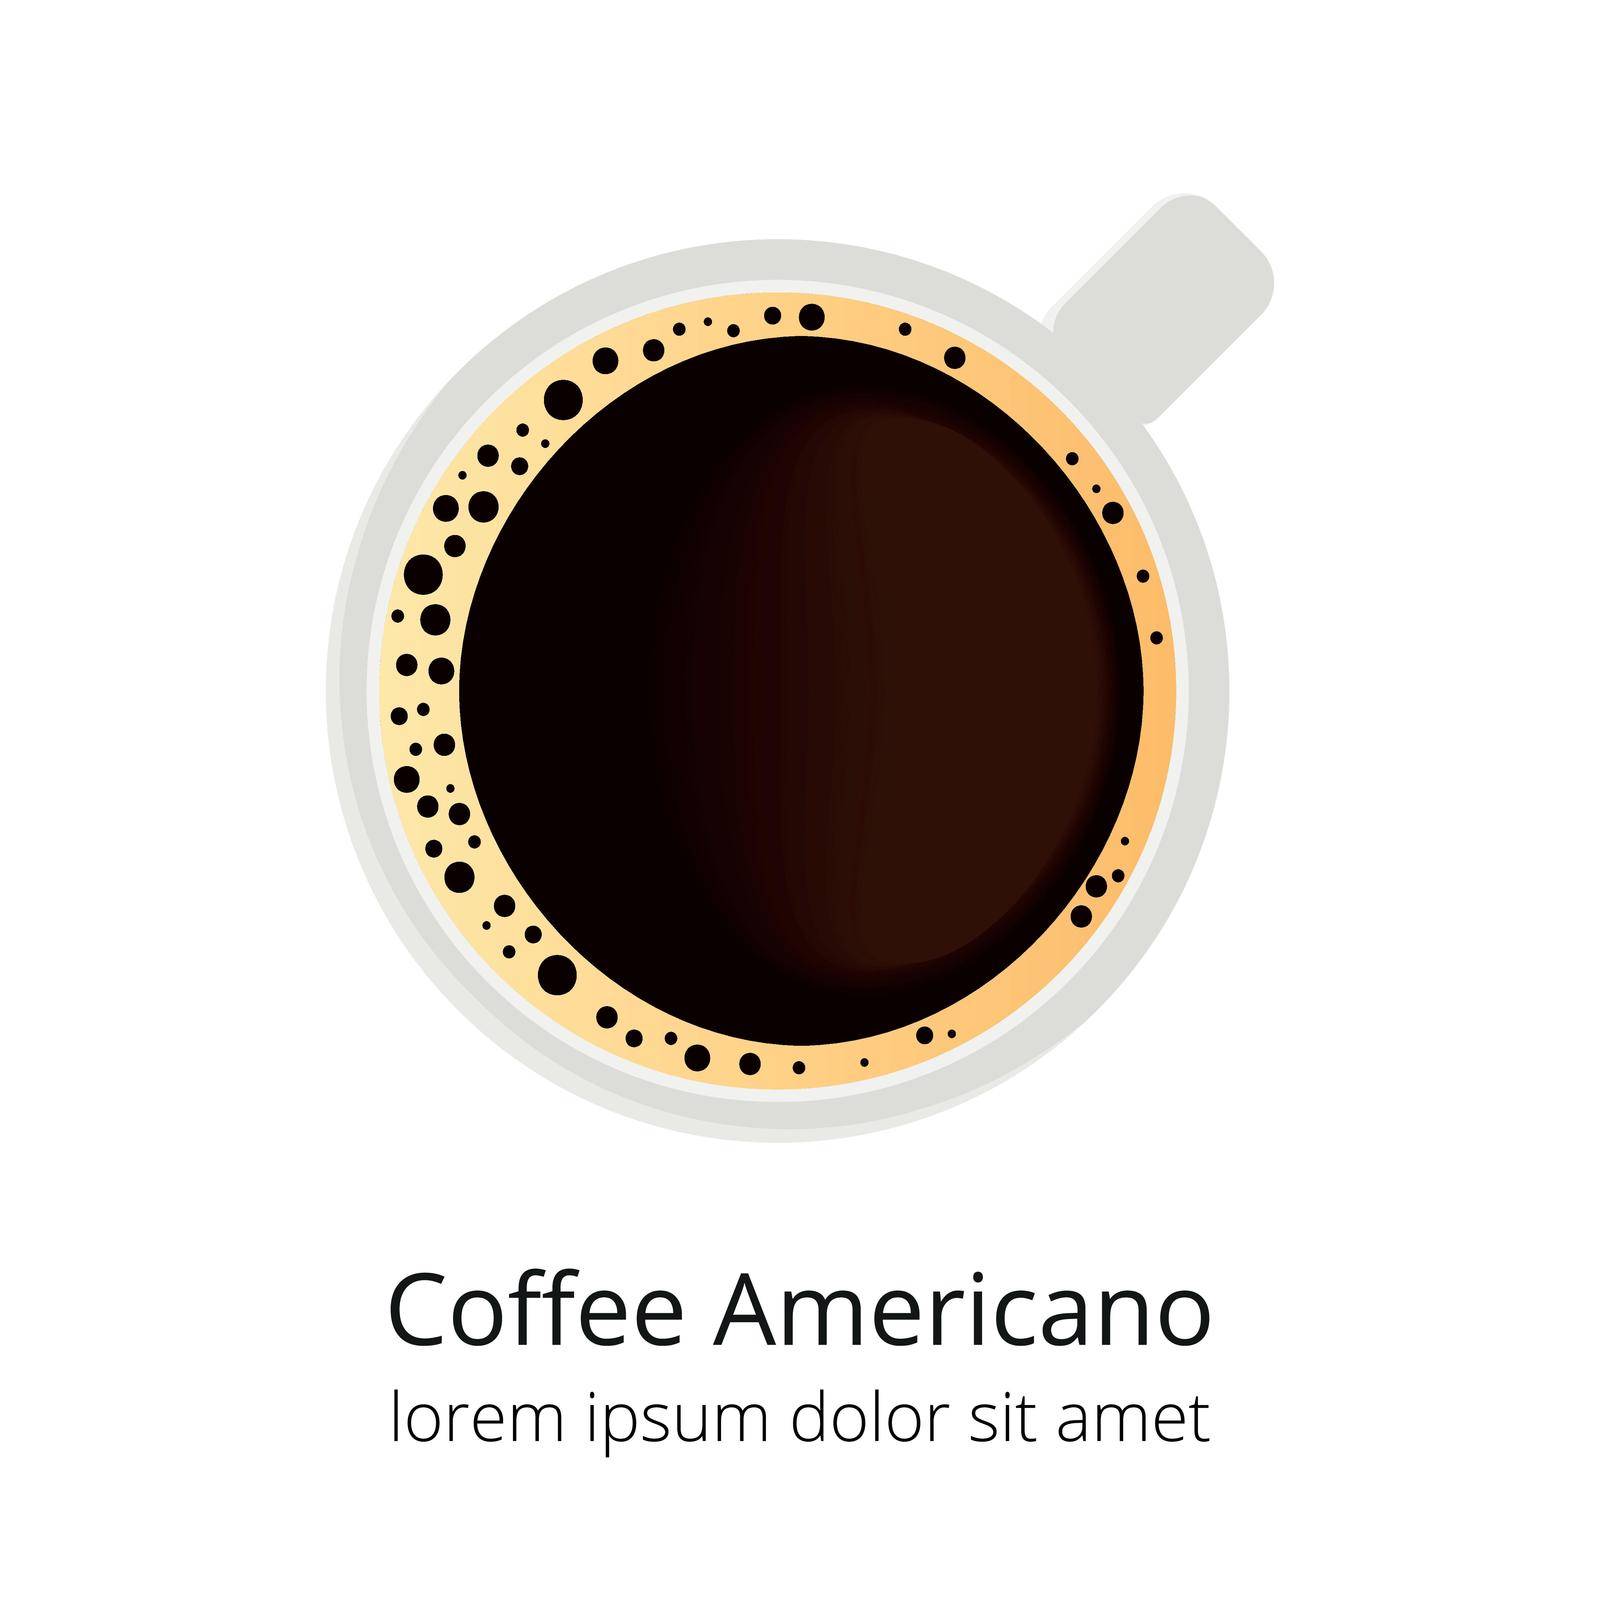 Classic coffee americano. by Minur